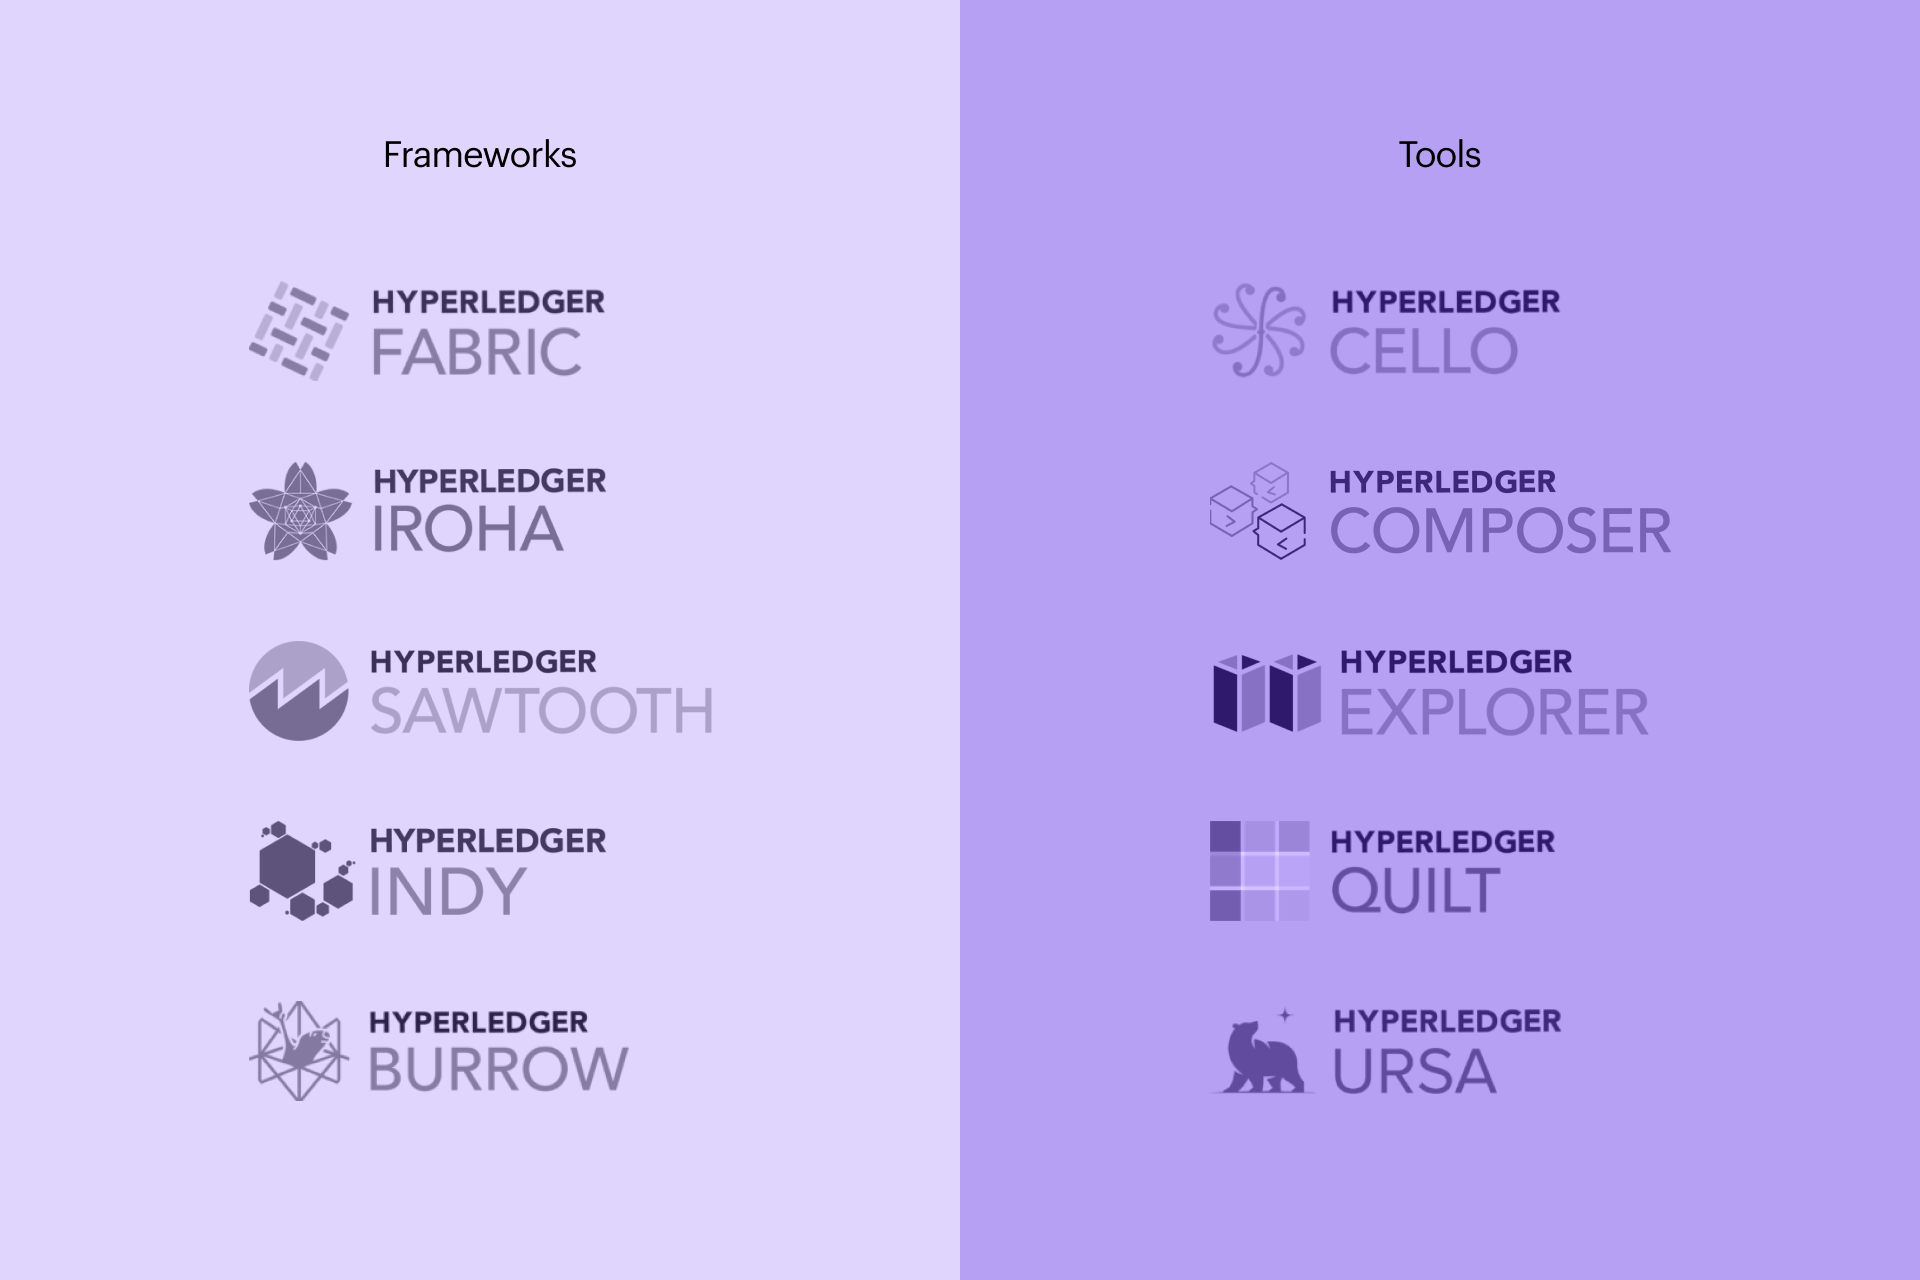 hyperledger frameworks and tools